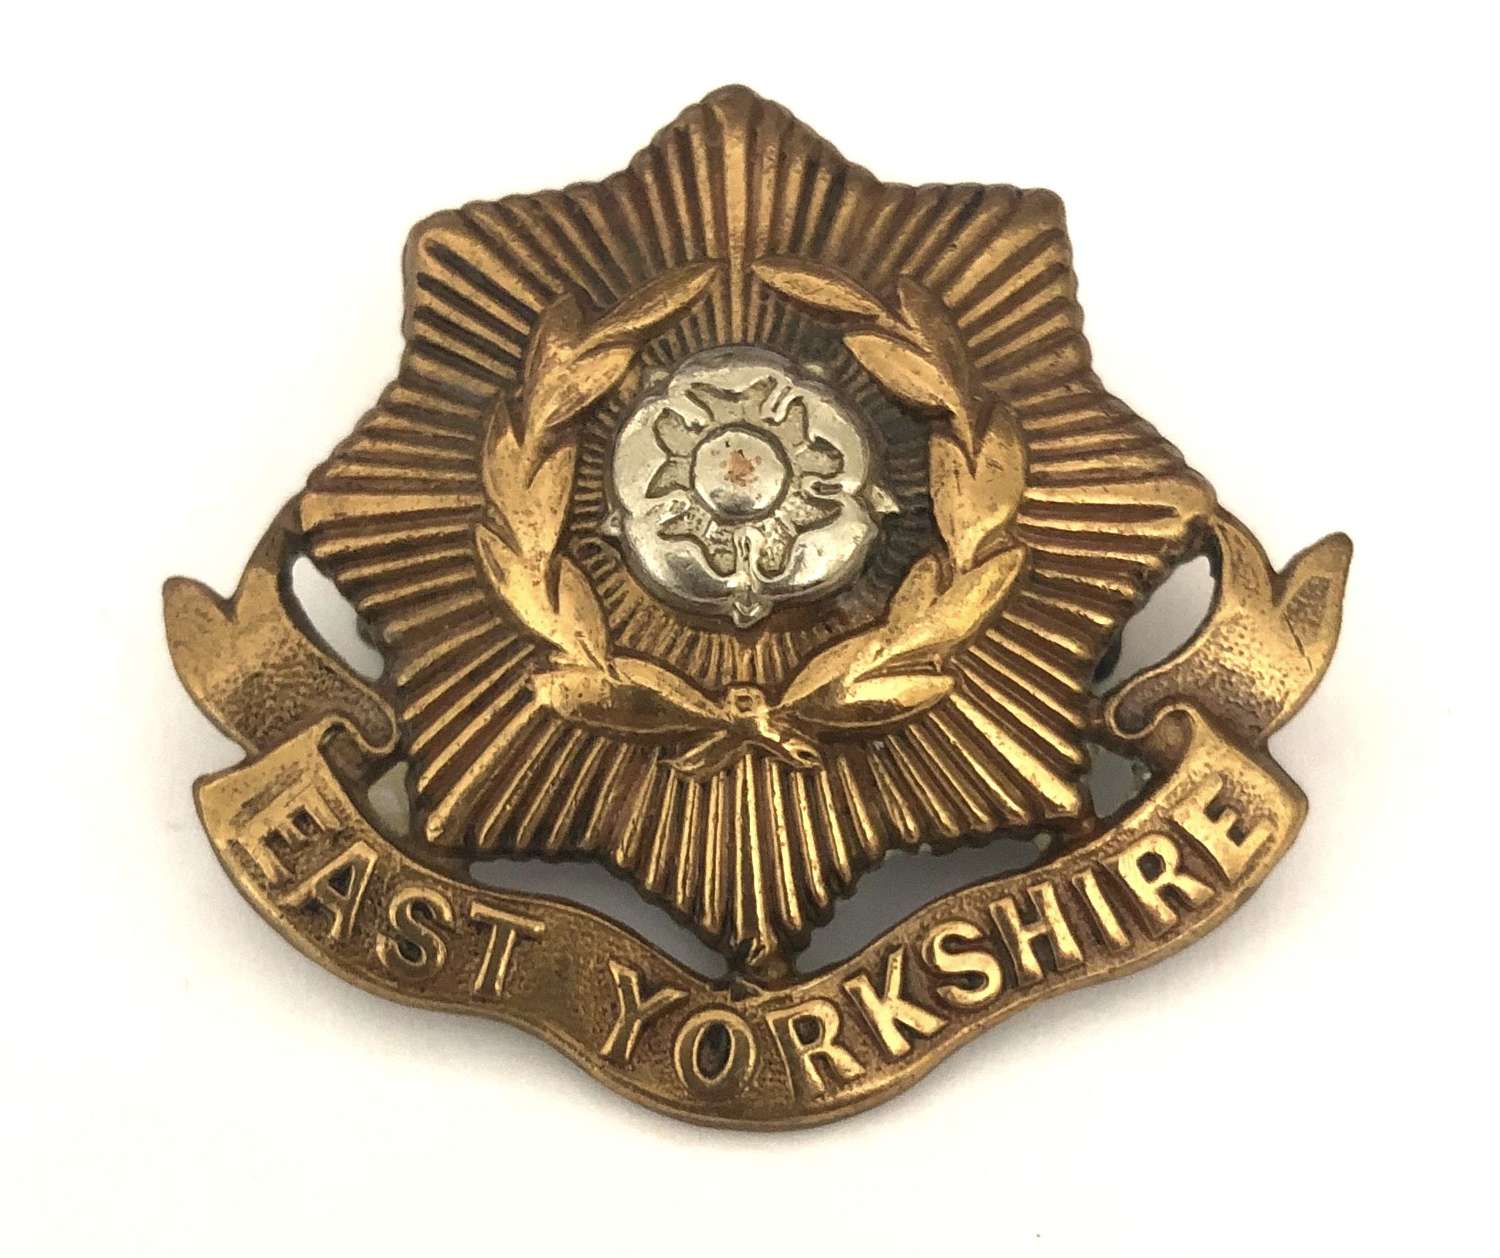 East Yorkshire Regiment Victorian  / Edwardian cap badge